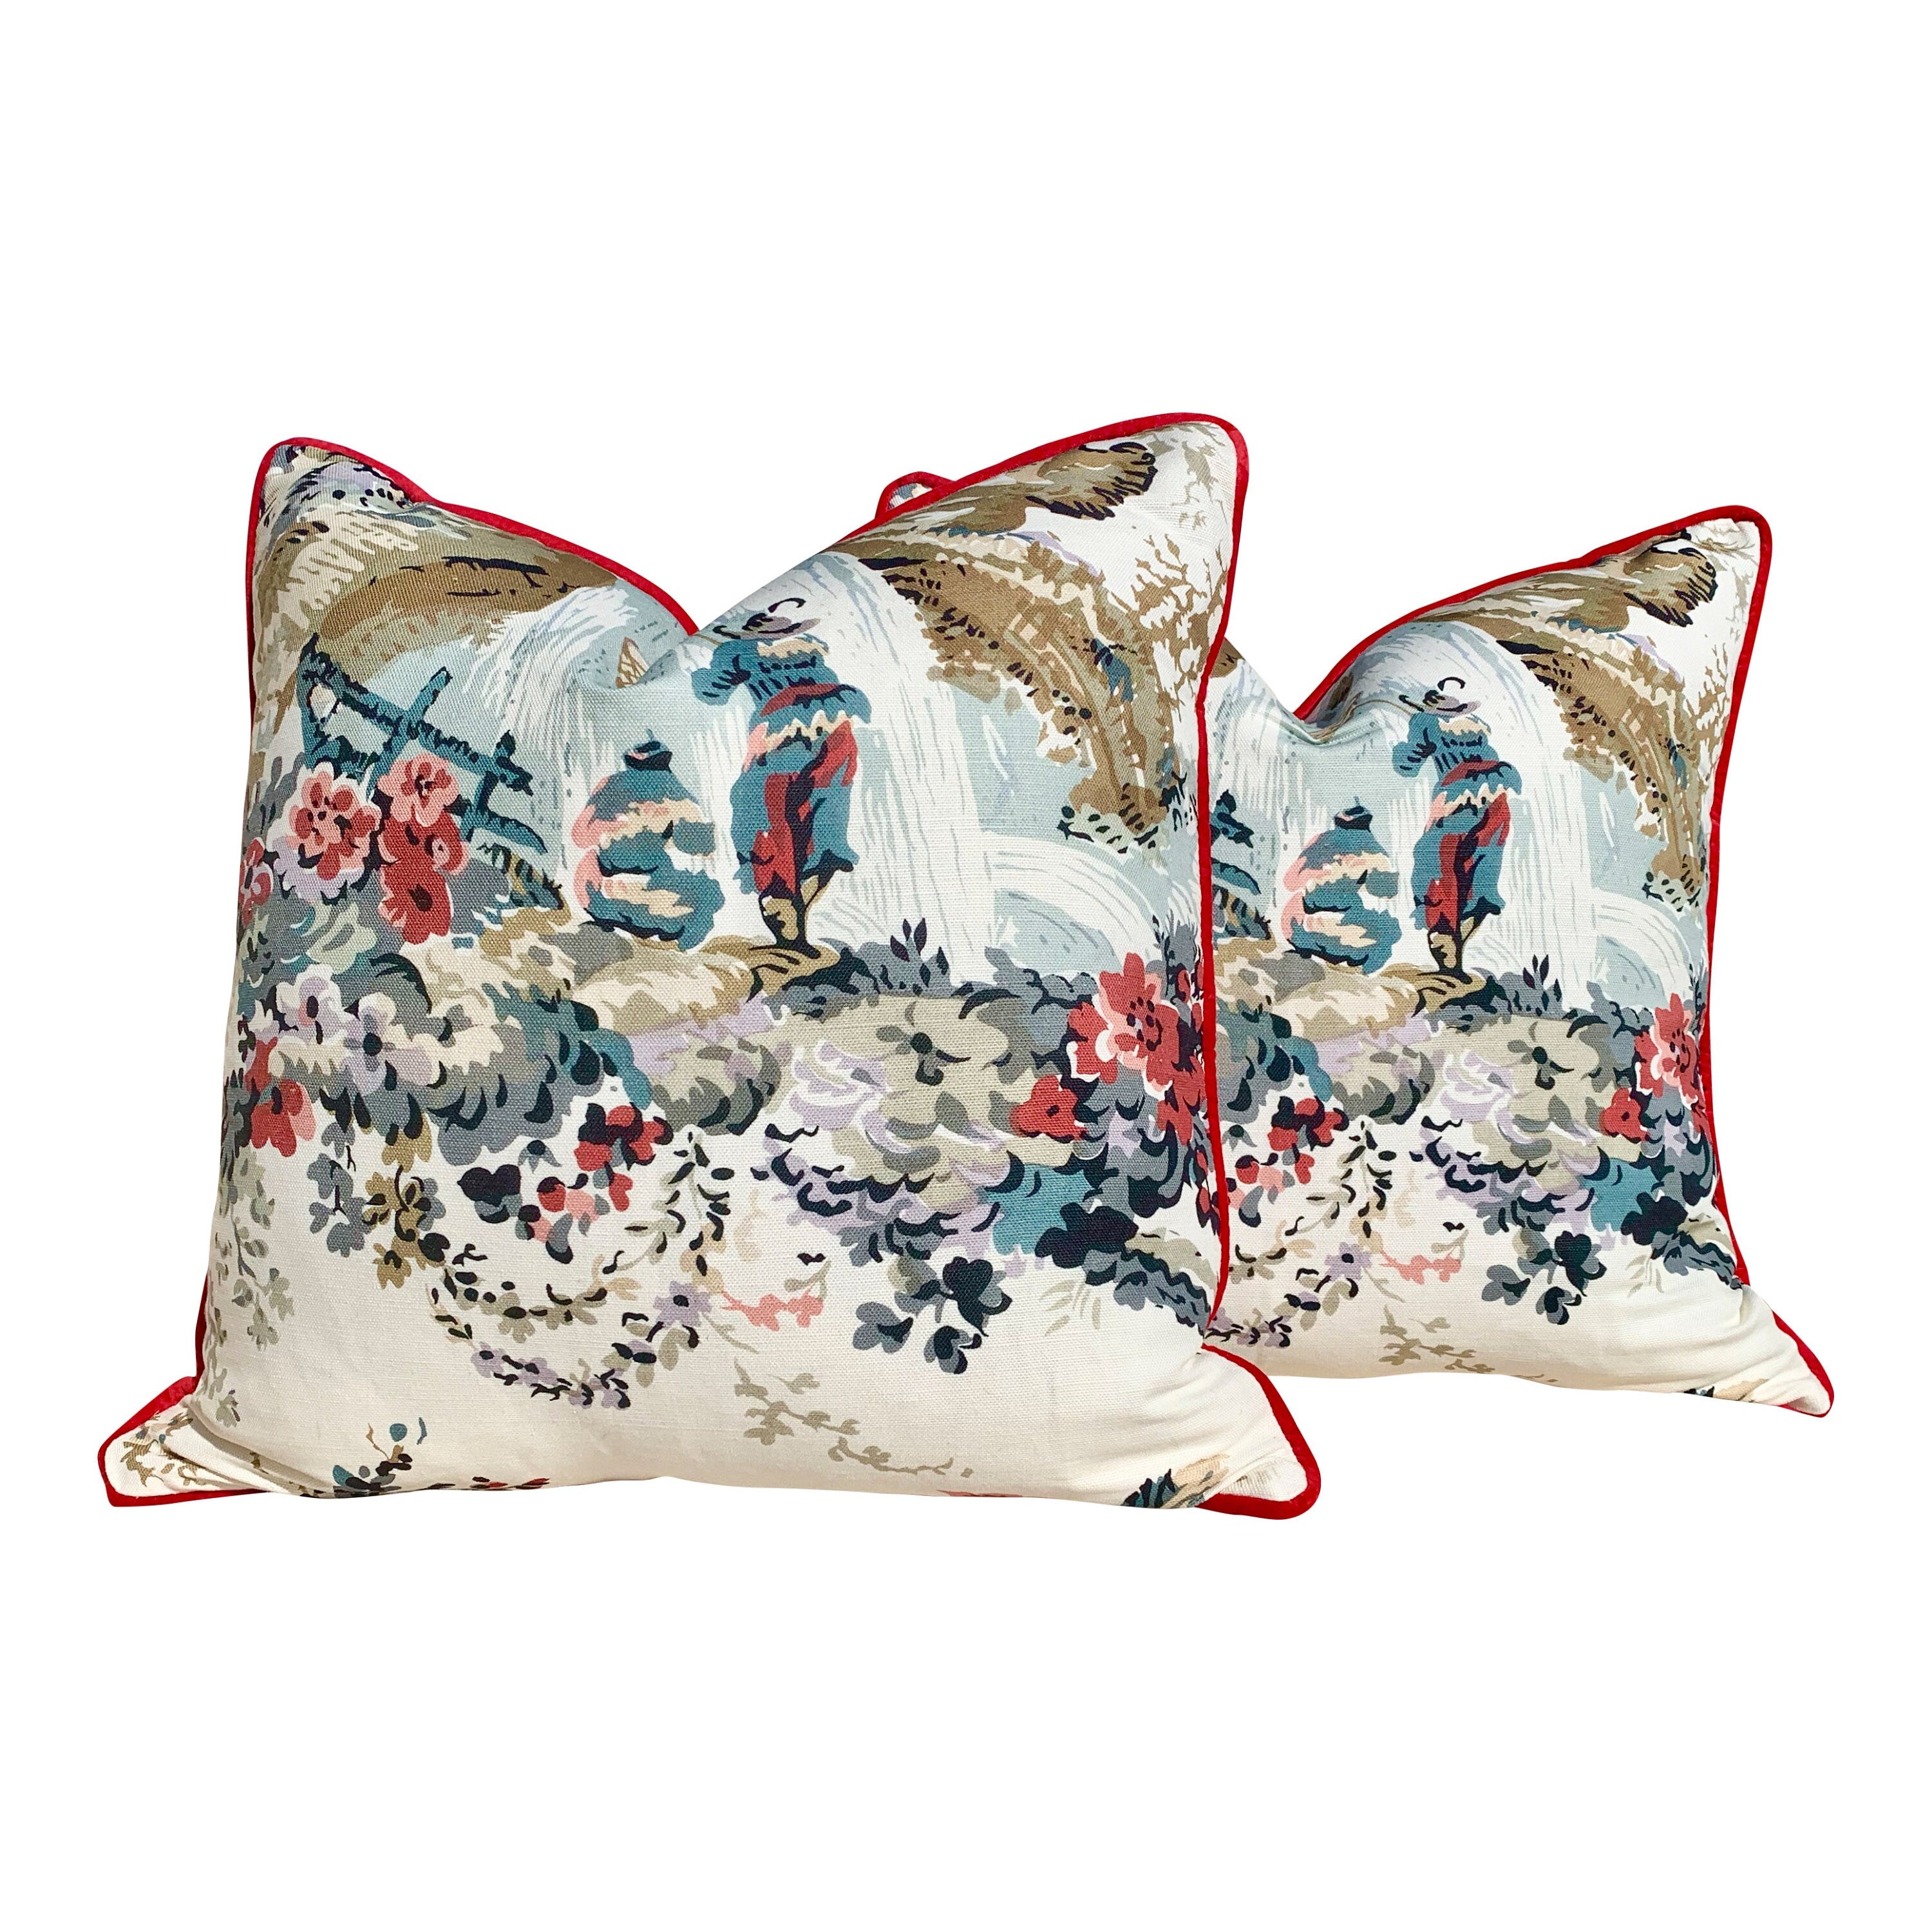 Moorea Linen Pillow in Cream, Red. Floral LInen Pillow. Chinoiserie Pillow, lumbar Floral Pillow Cover, Euro Sham Pillow, Decorative Pillow